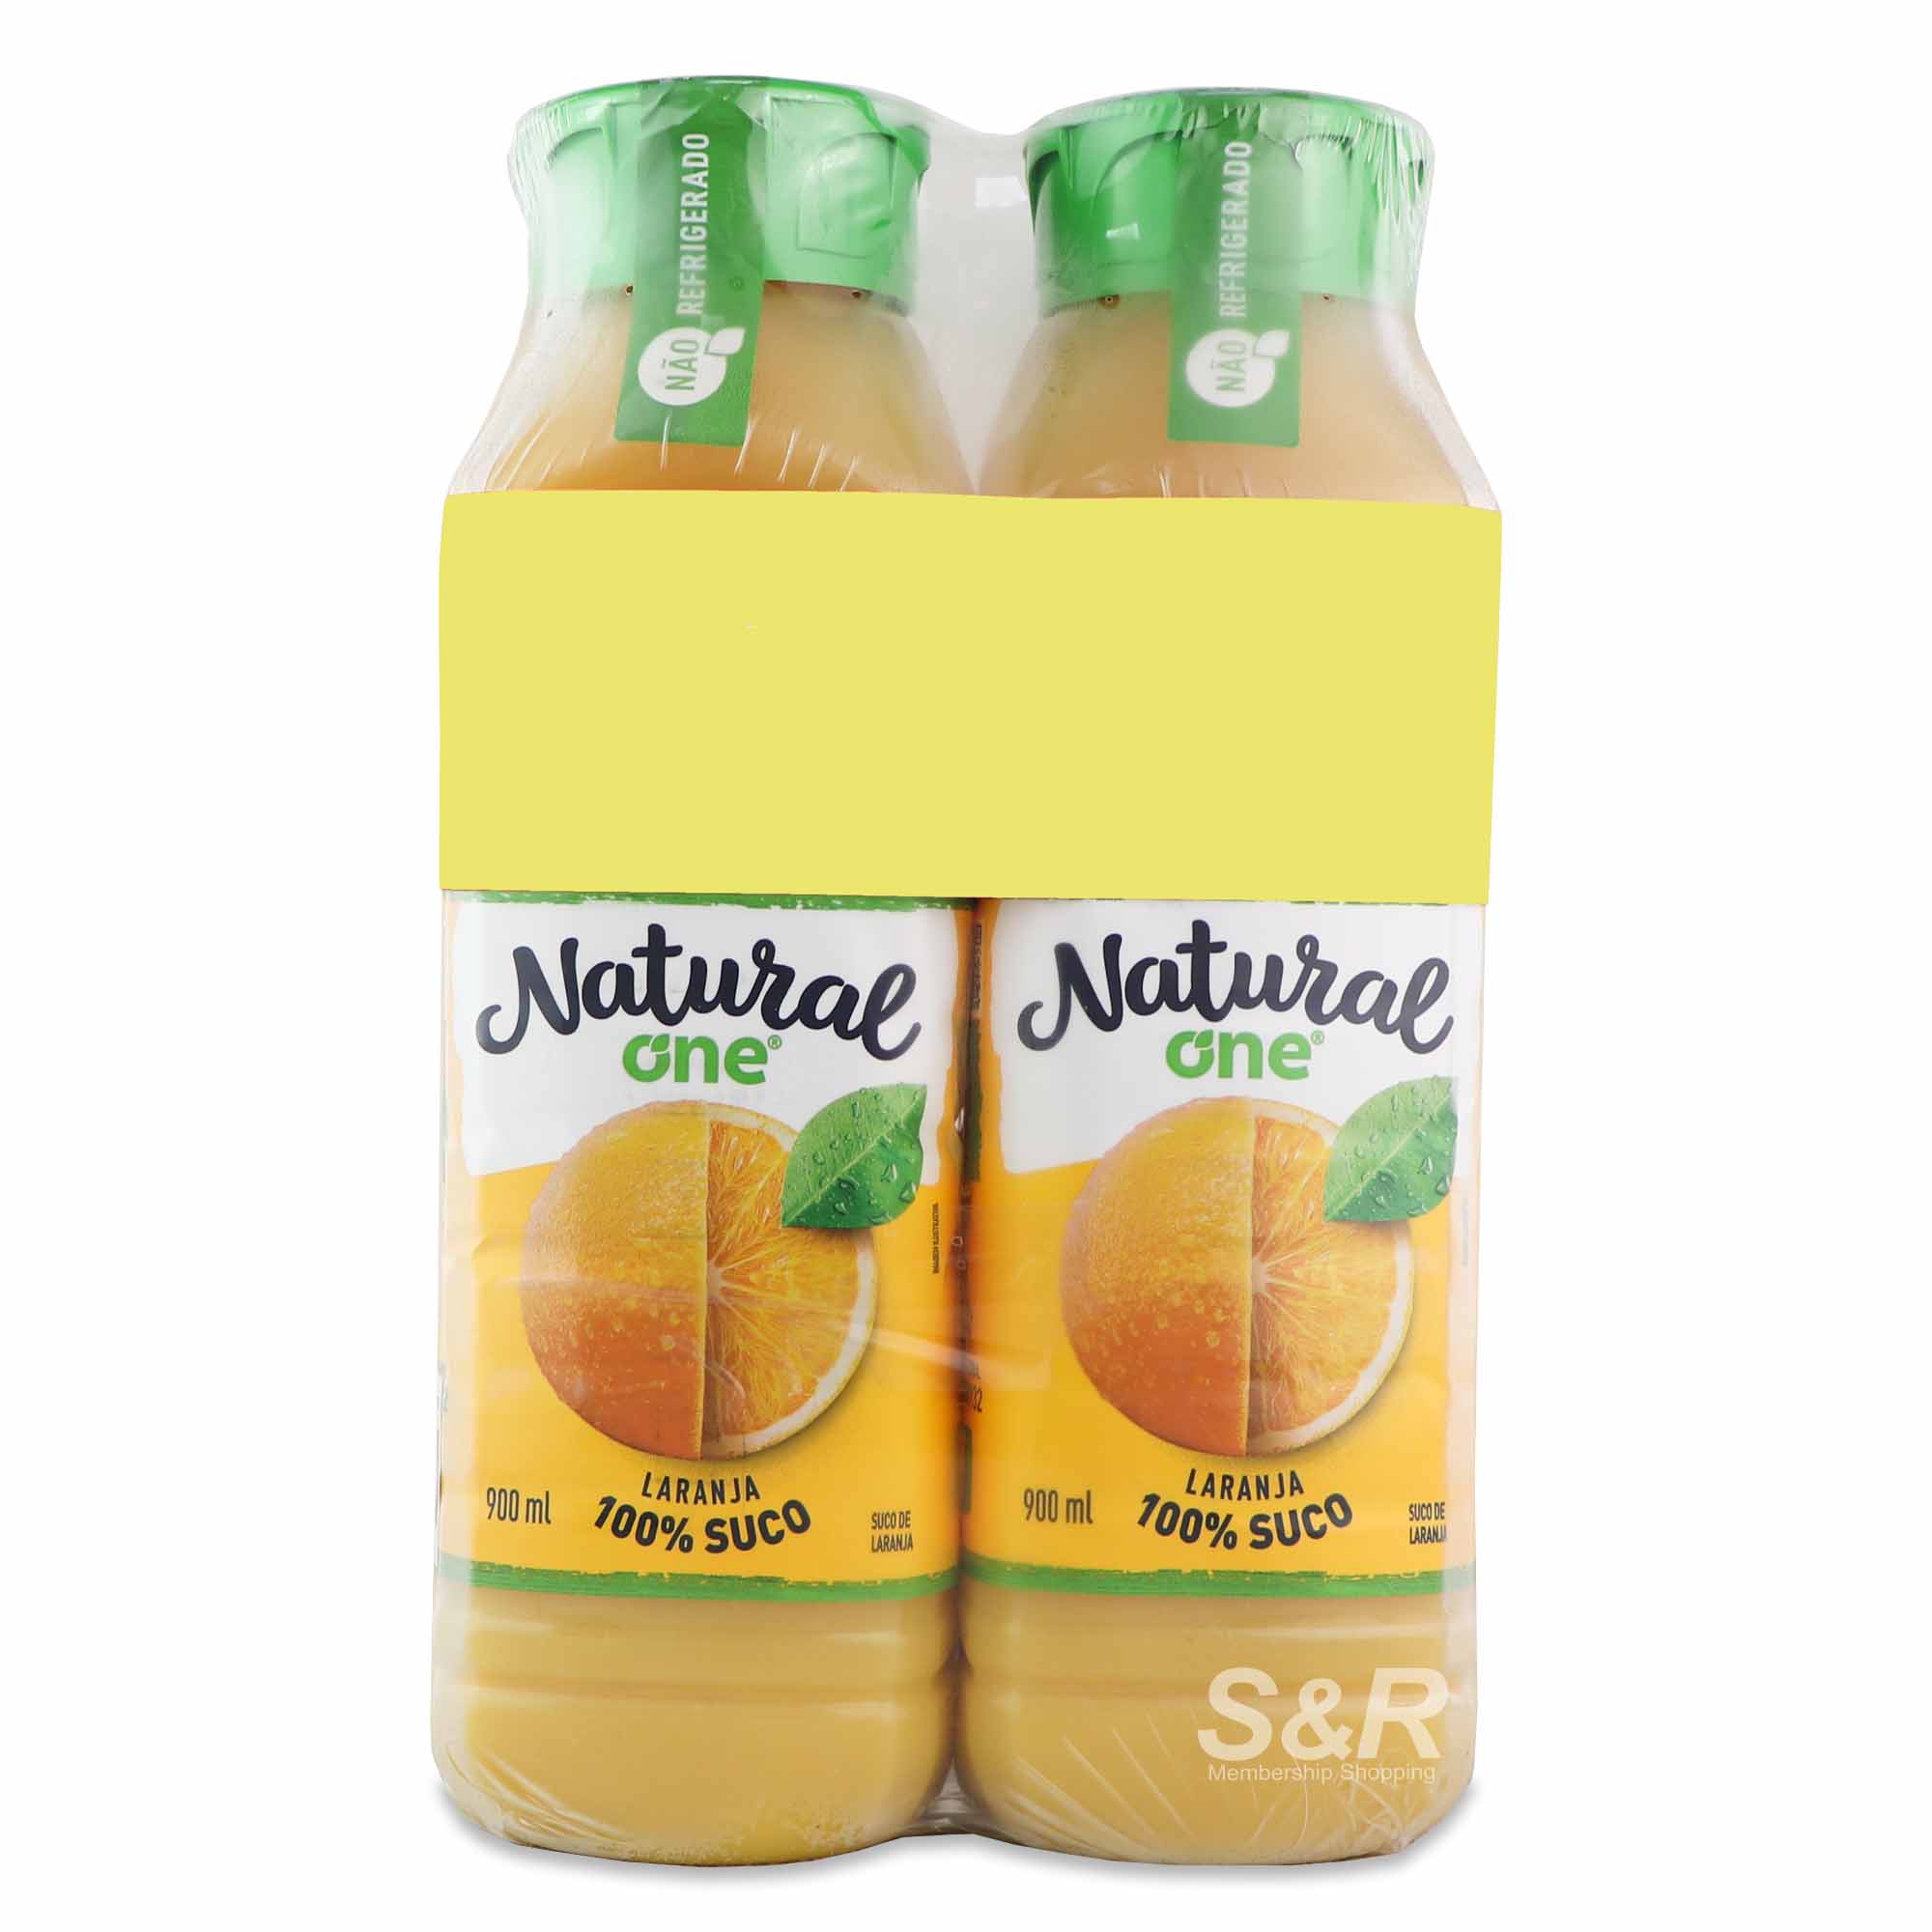 Natural One Orange Juice 900ml x 2pcs